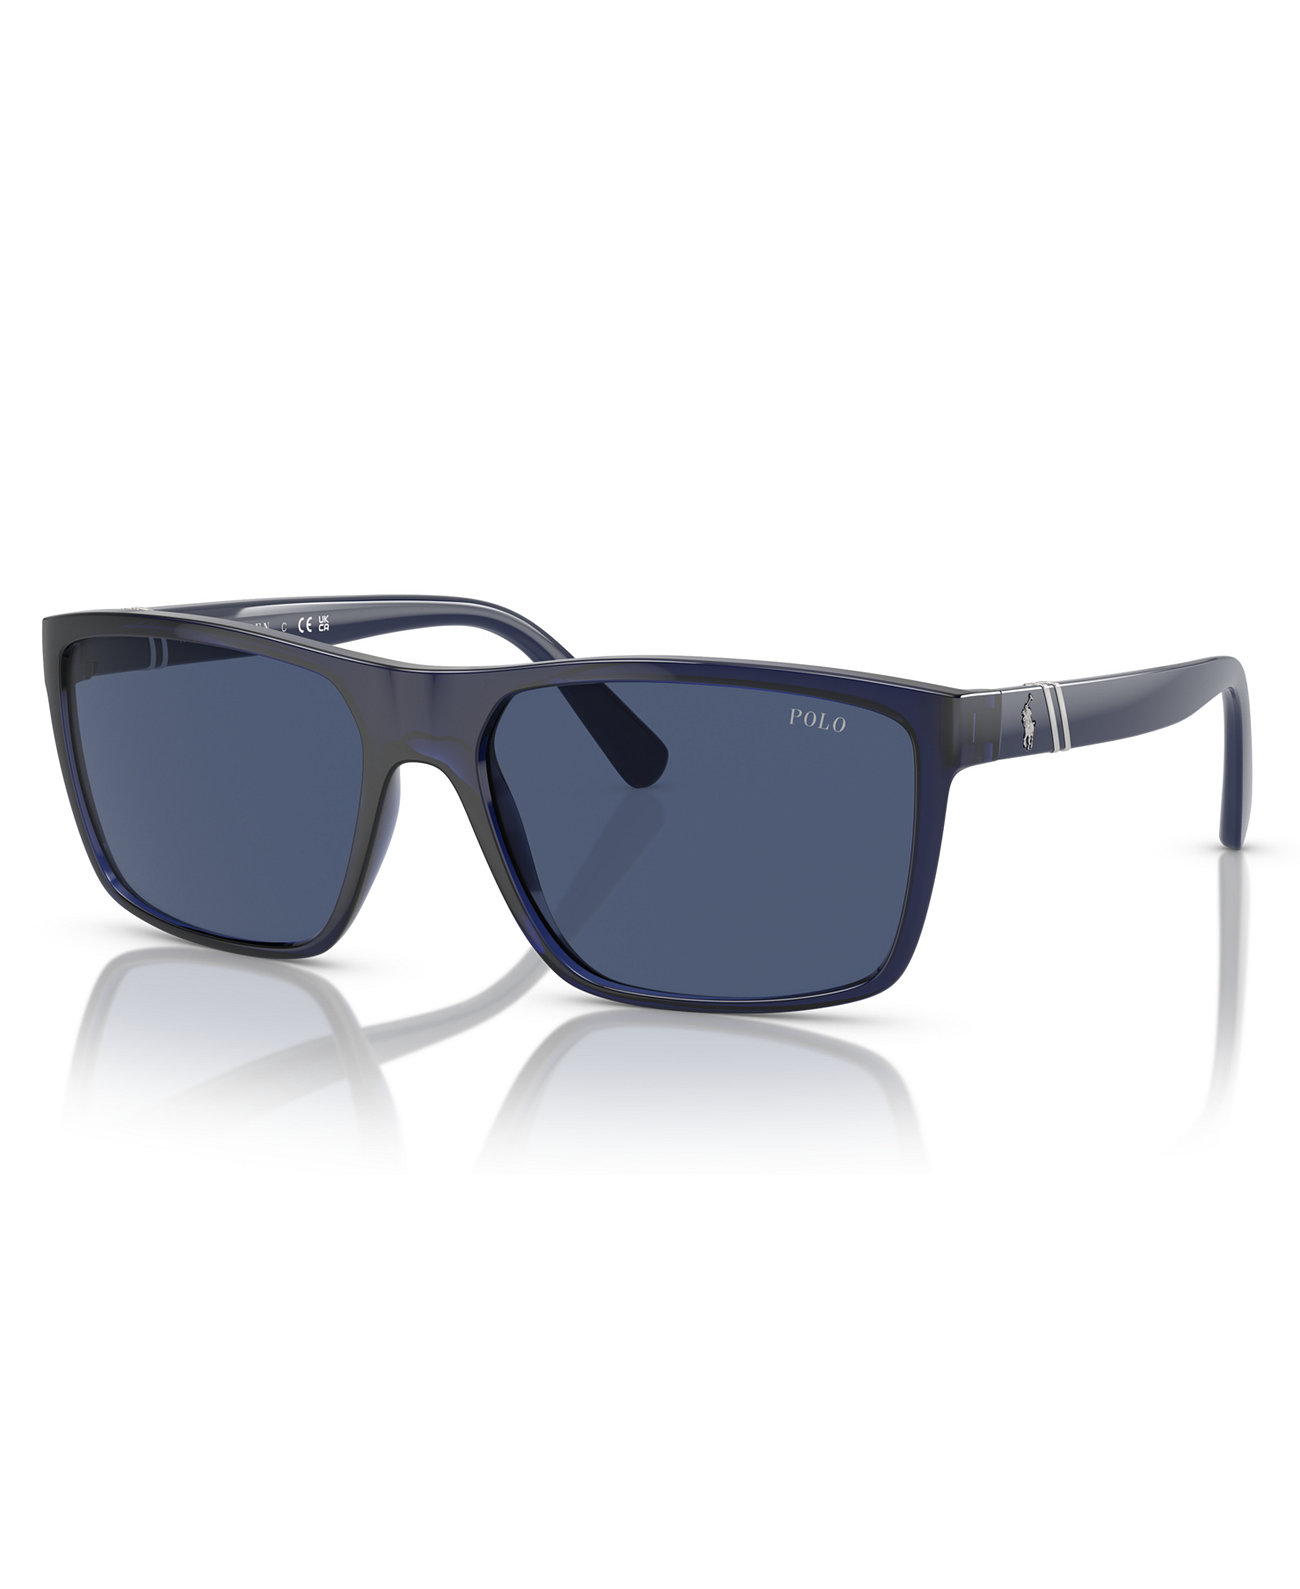 Men's Sunglasses PH4133 Polo Ralph Lauren